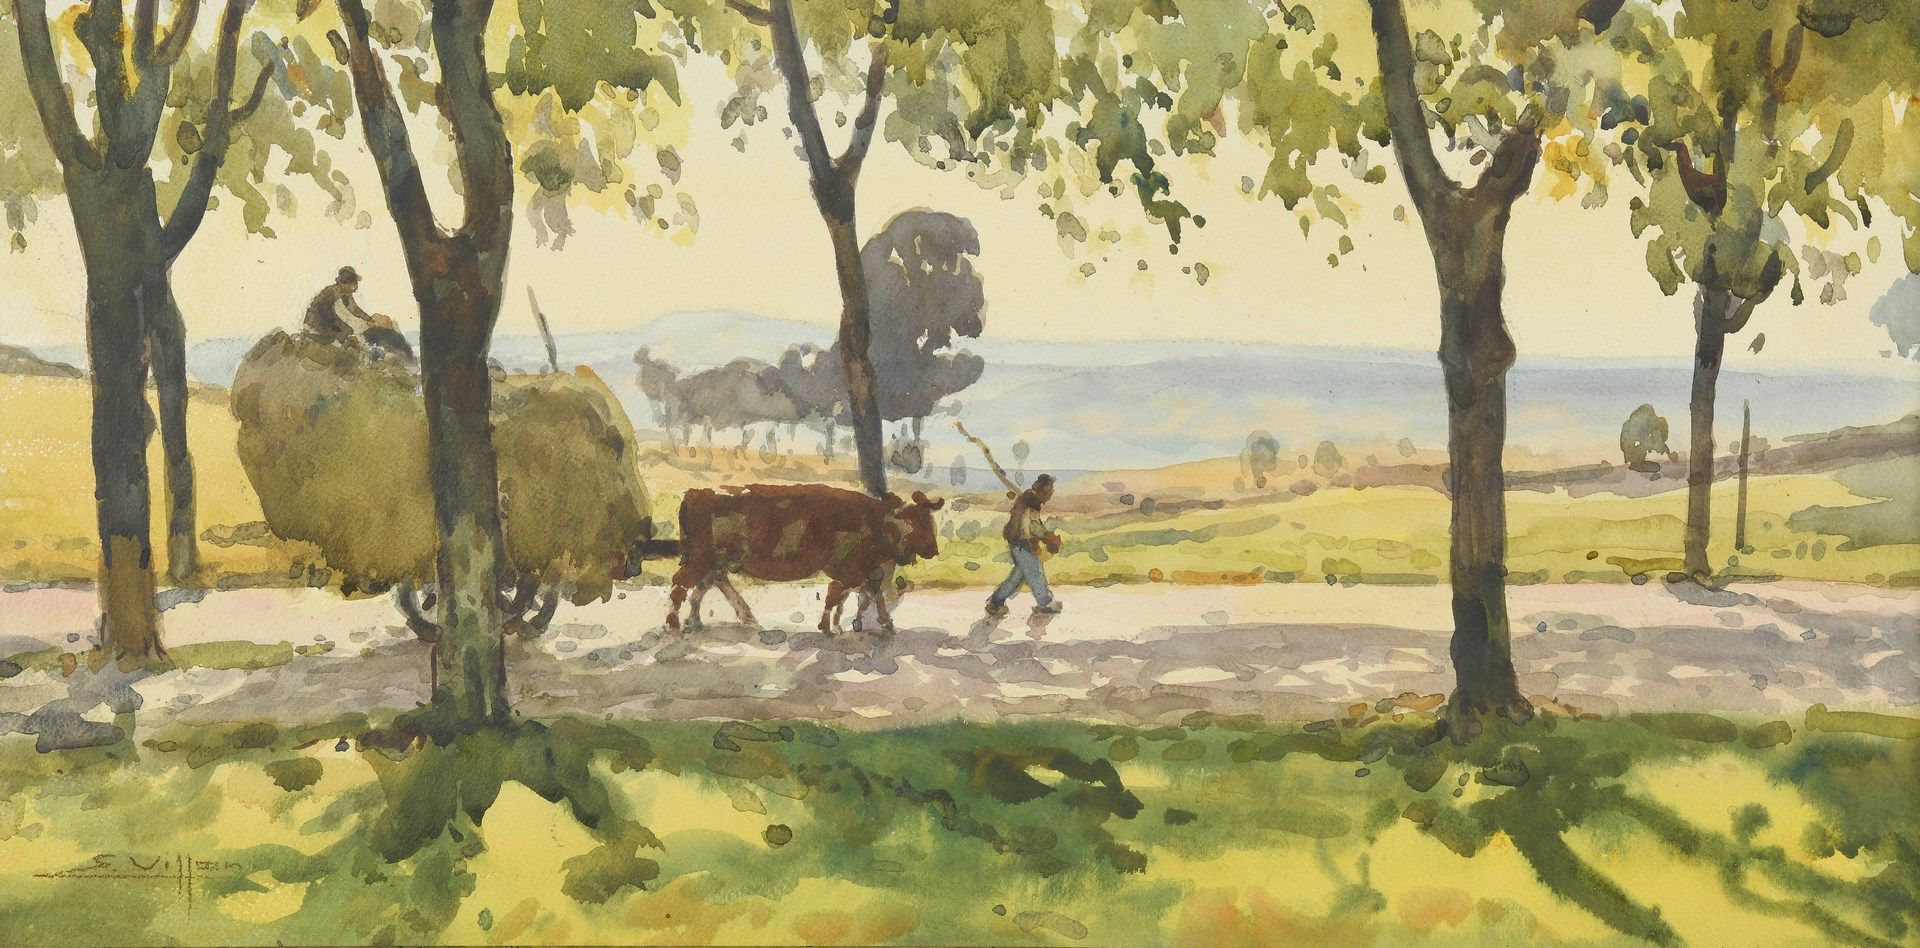 Null 维龙-欧仁，1879-1951年

干草车

水彩画和水粉画

左下角有签名

26 x 53,5 cm at sight